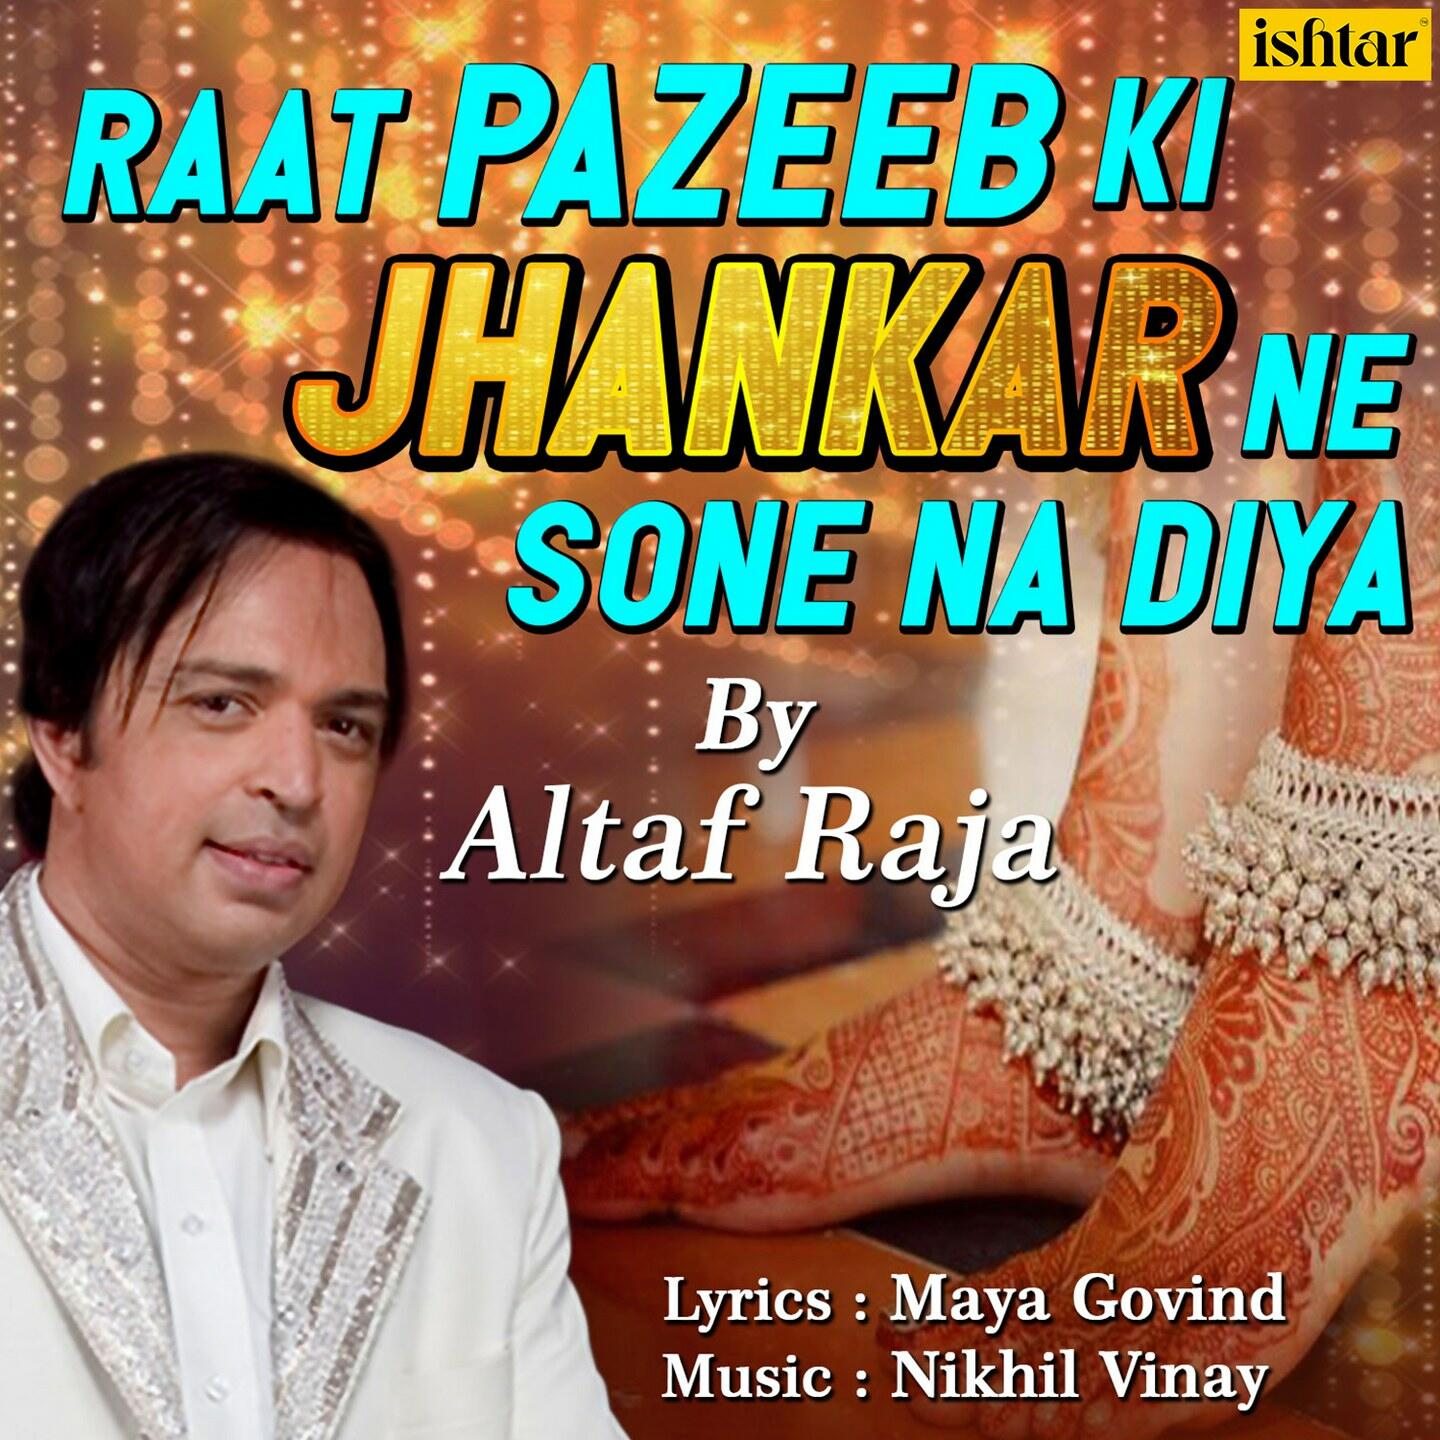 Altaf Raja Raat Pazeeb Ki Jhankar Ne Sone Na Diya Iheartradio 